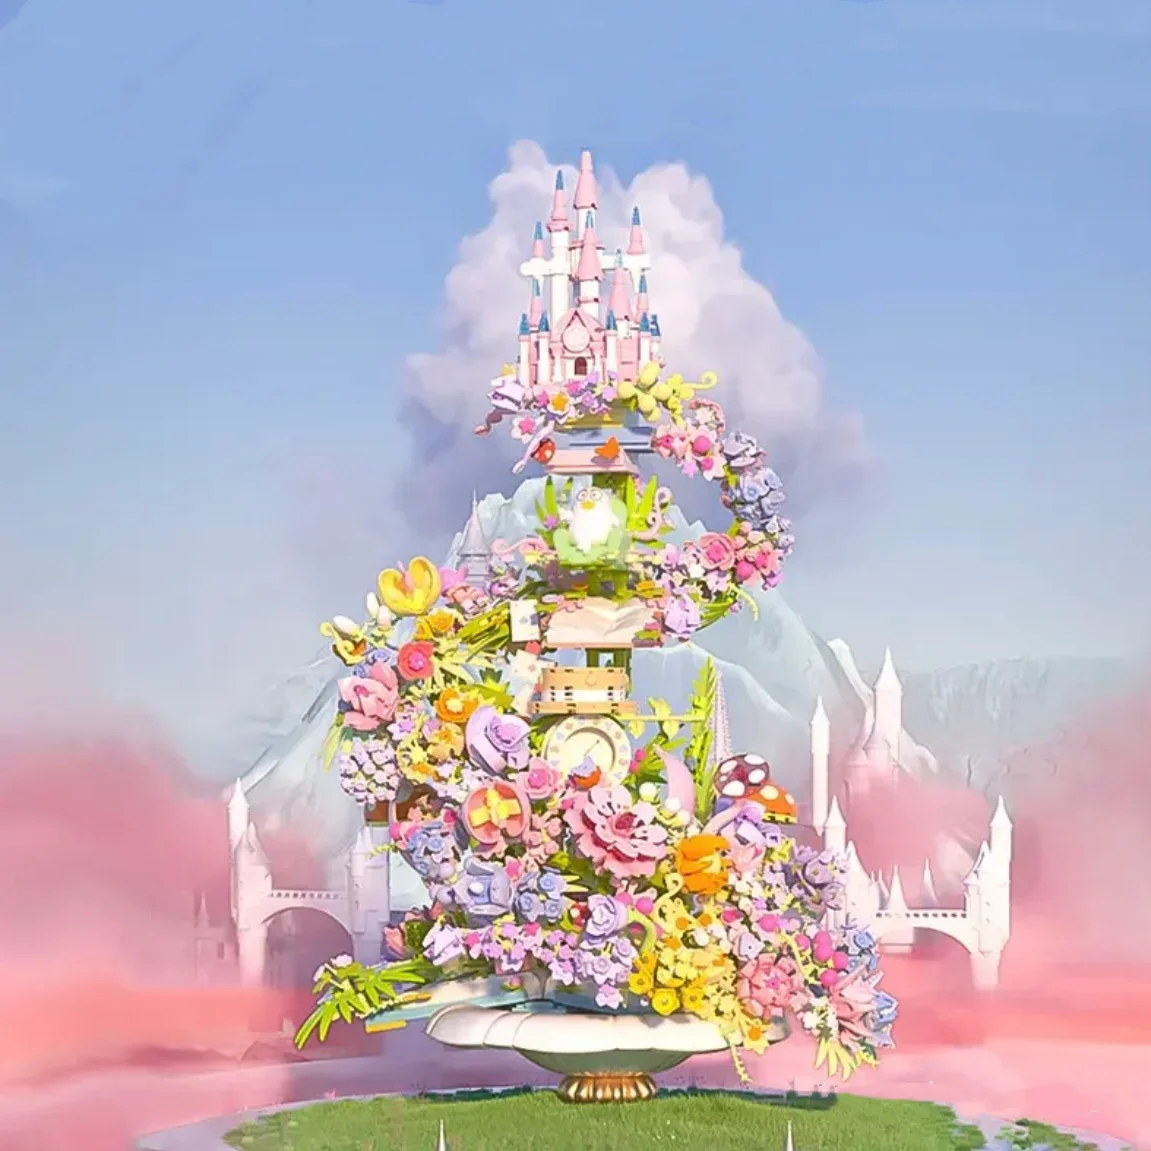 

3060PCS Blocks Flowers Castle Building Dreamy Duck Cartoon Architecture Waterfall Light DIY Bricks Toy for Kid Girls Adult Gift